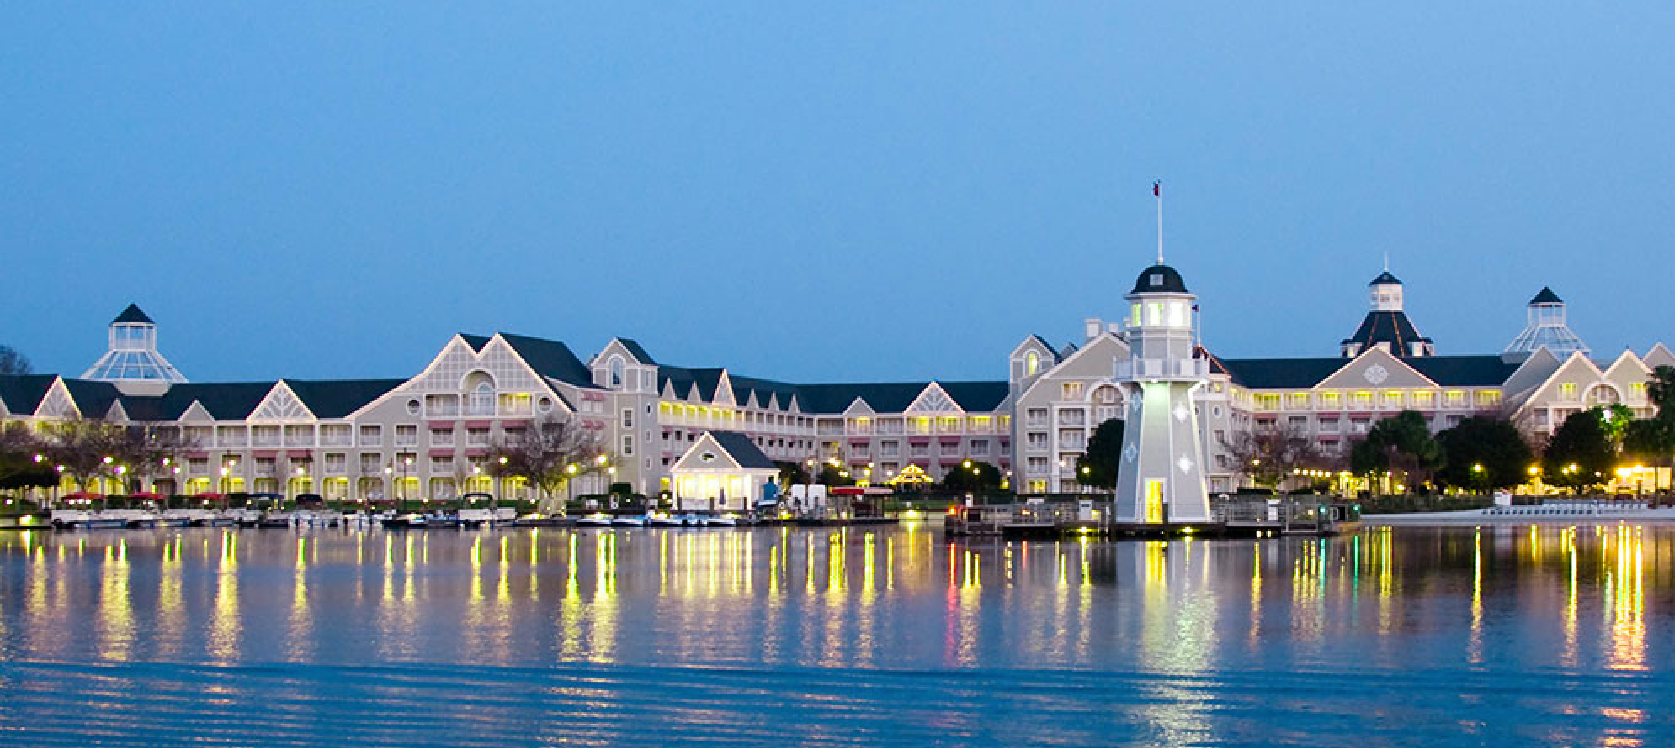 ResortLoop.com Episode 553 – Our Summer Disney Dining Series: Yacht Club